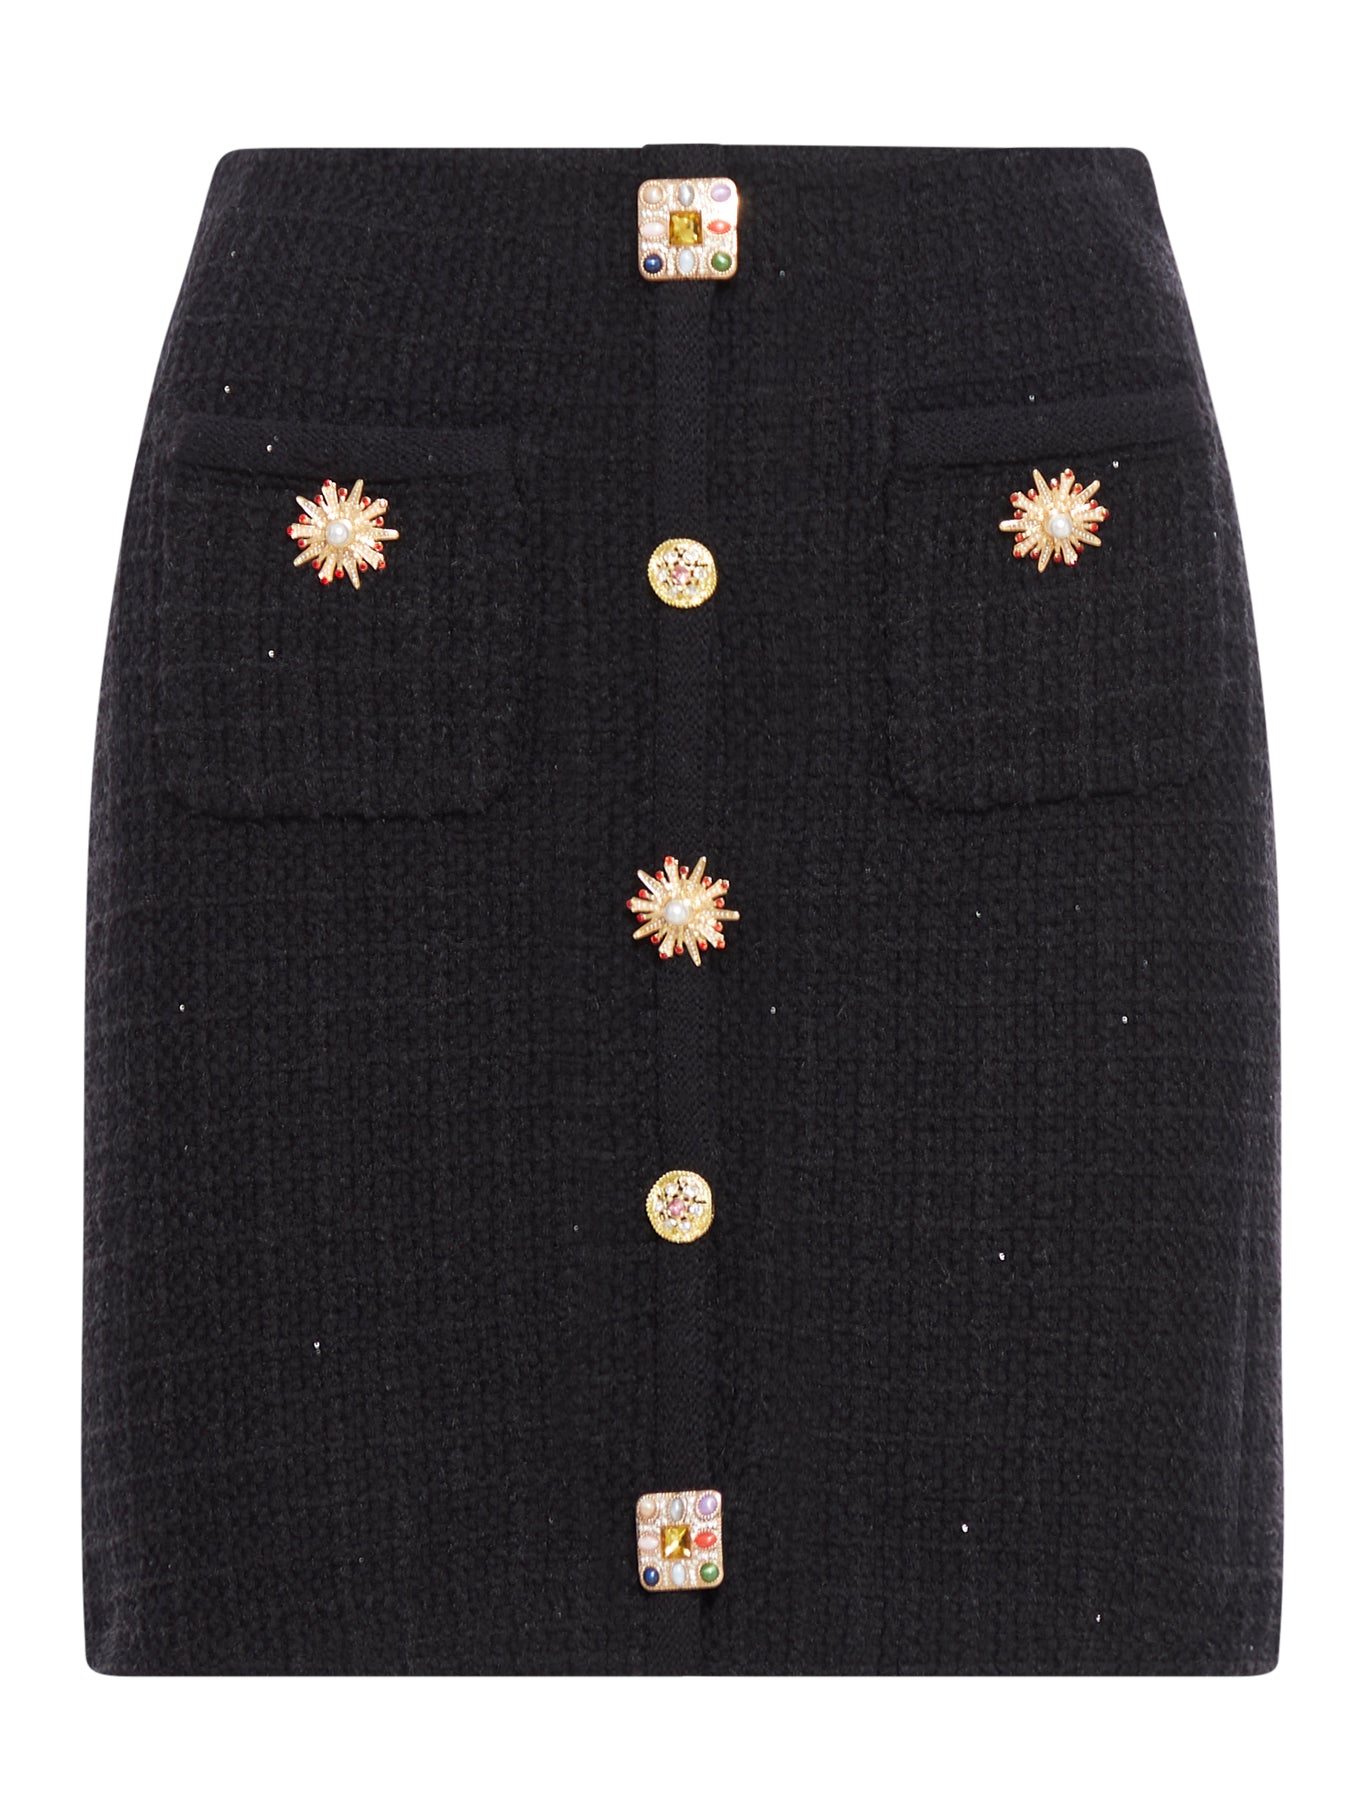 Miniskirt with jewel buttons